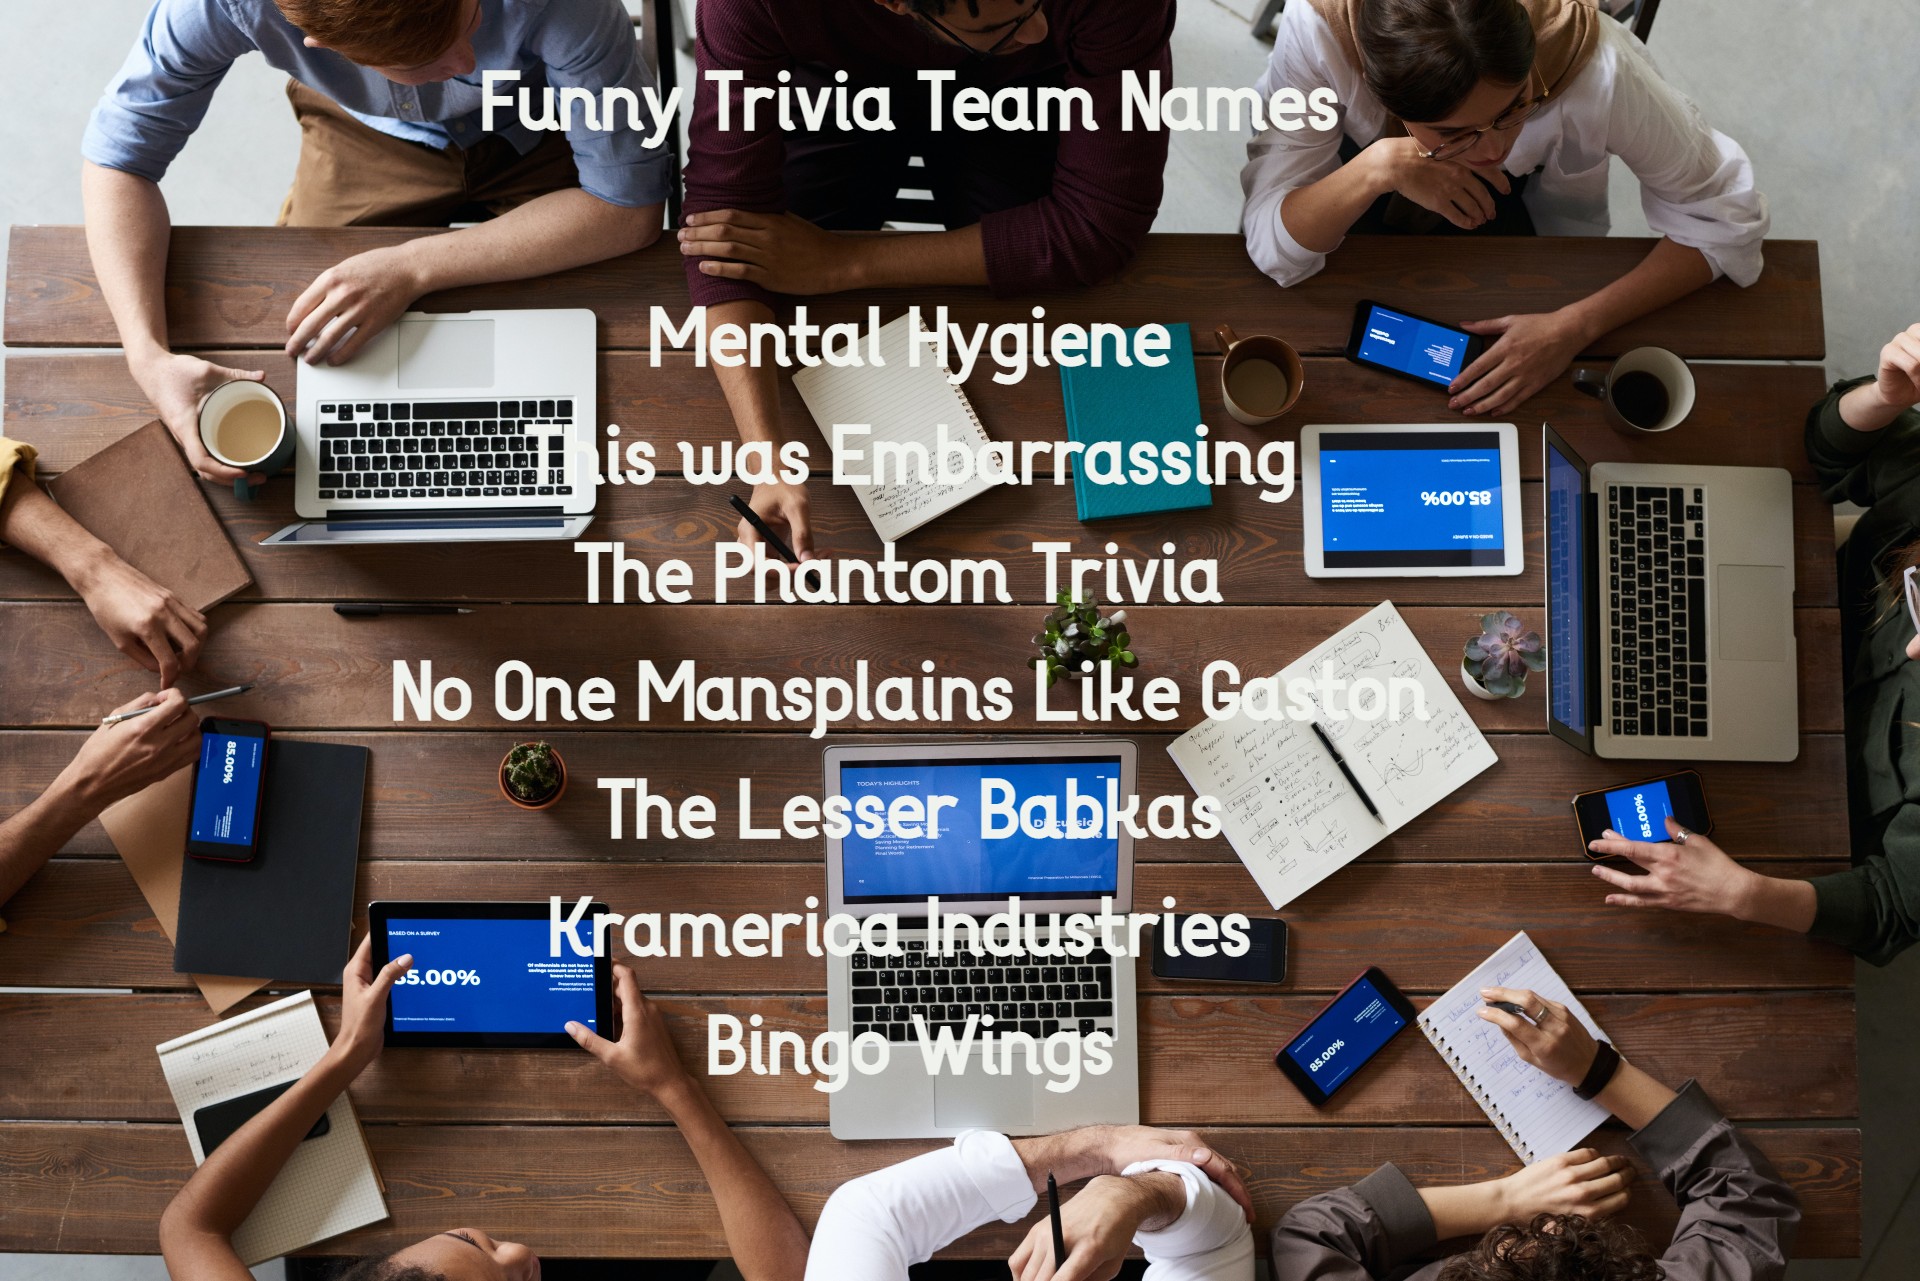 Trivia Team Names